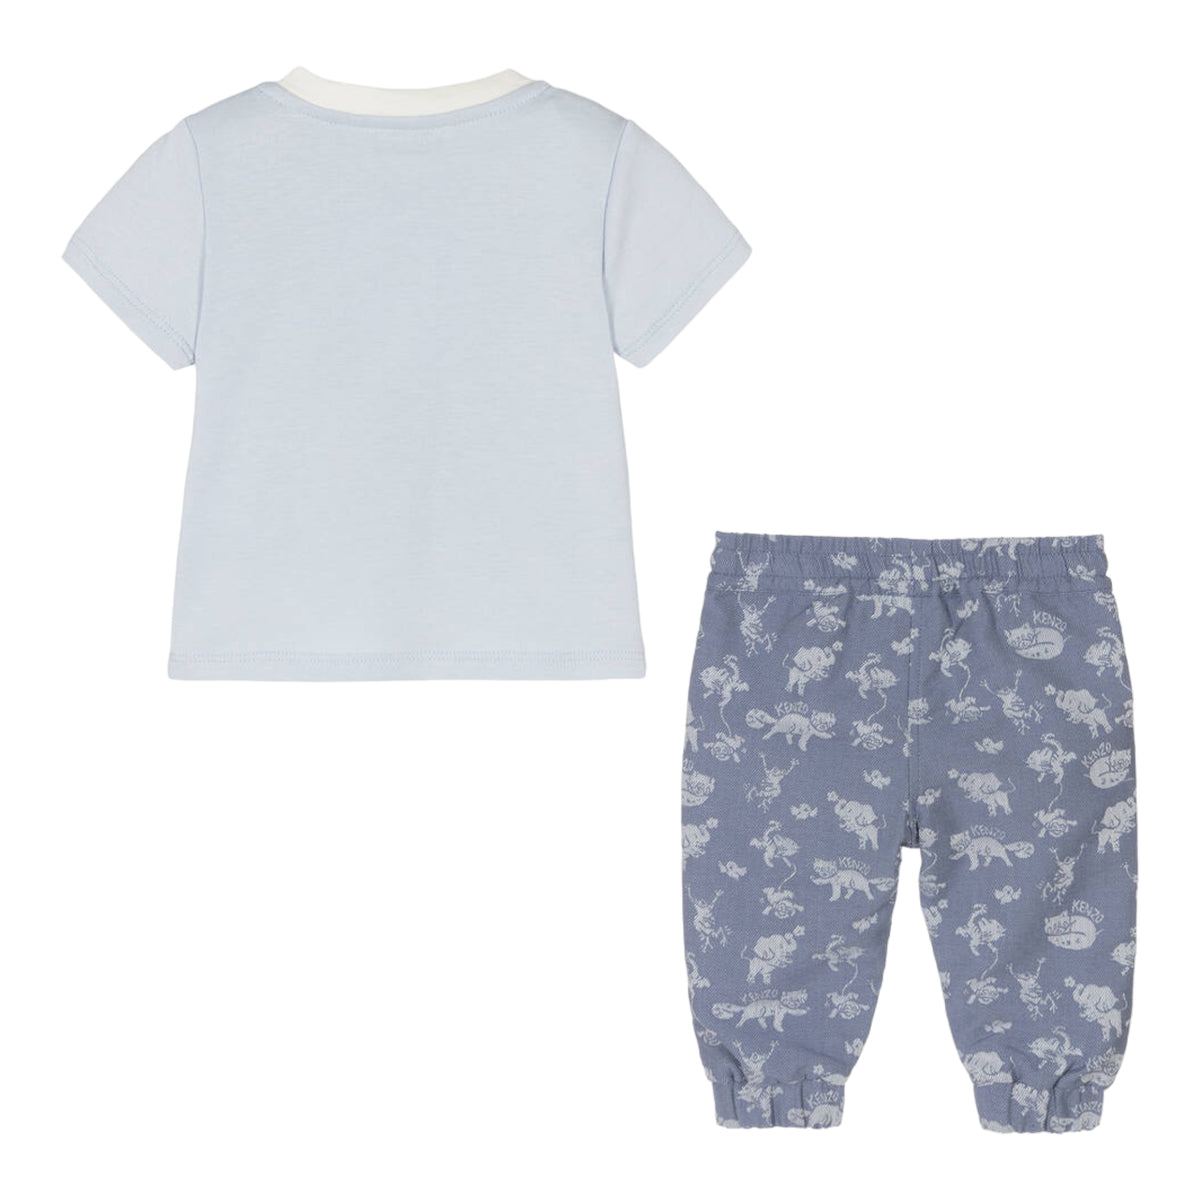 Kenzo Kids Infant Boy's T-Shirt and Pant Set